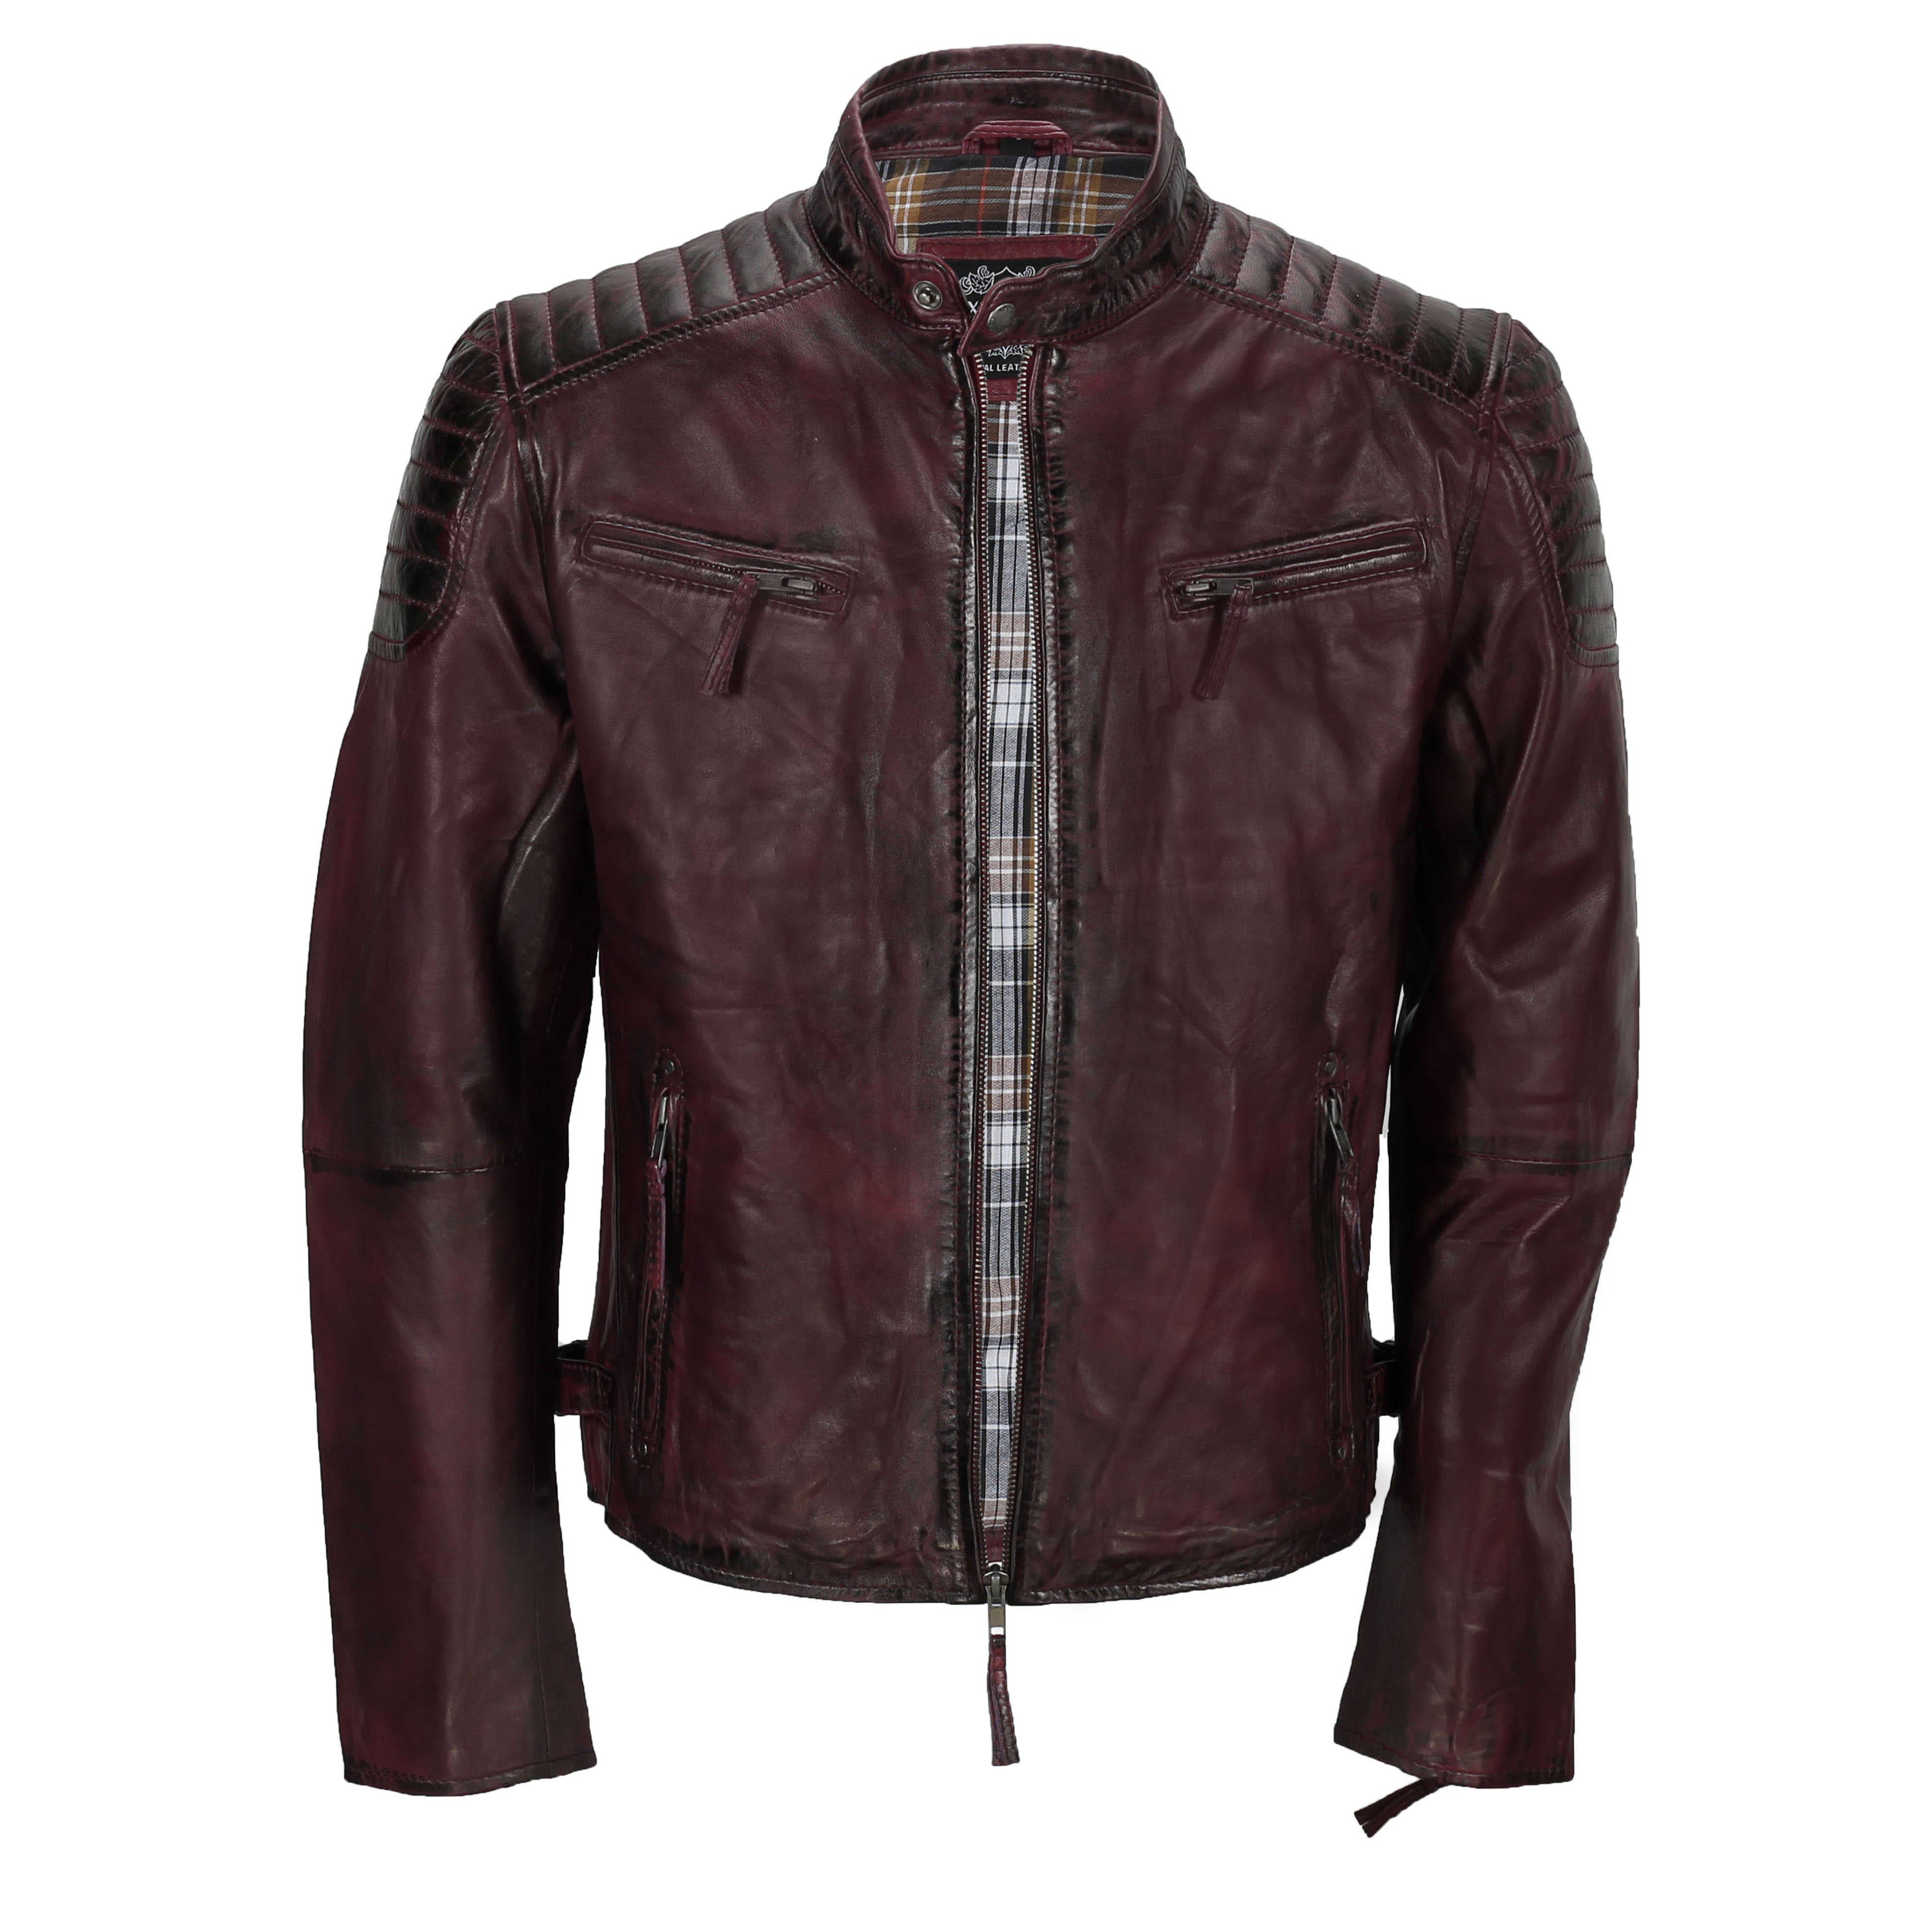 Mens Real Leather Biker Jacket In Washed Antiqued Maroon Vintage Slim Fitted